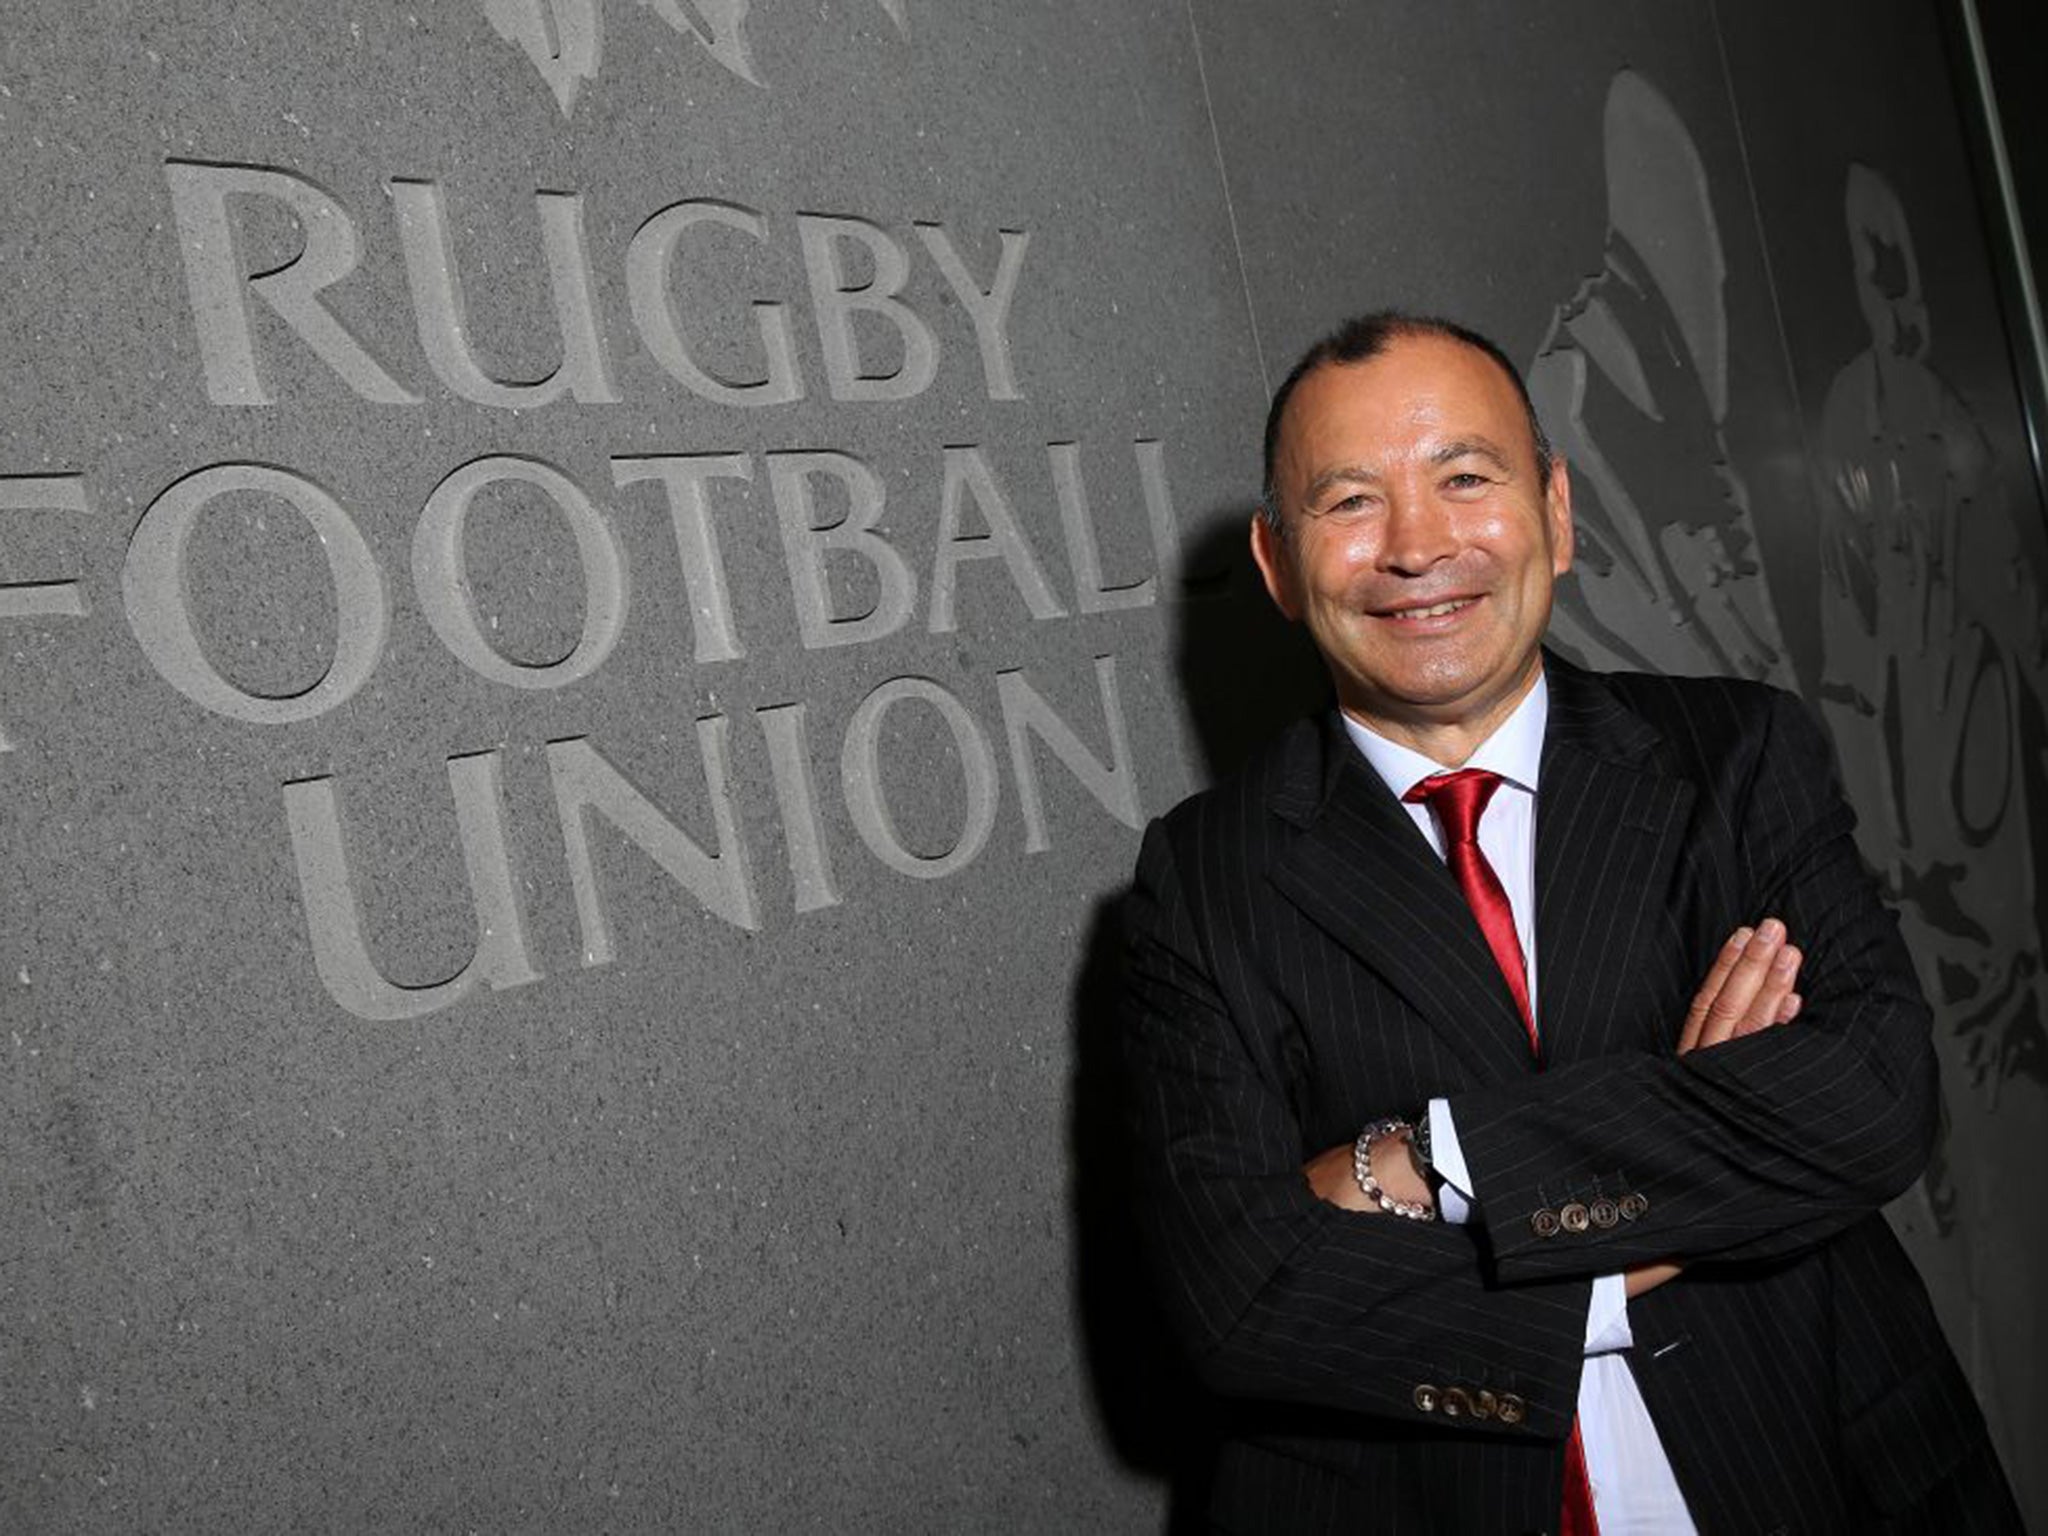 Eddie Jones, the new England Rugby head coach, posing at Twickenham Stadium